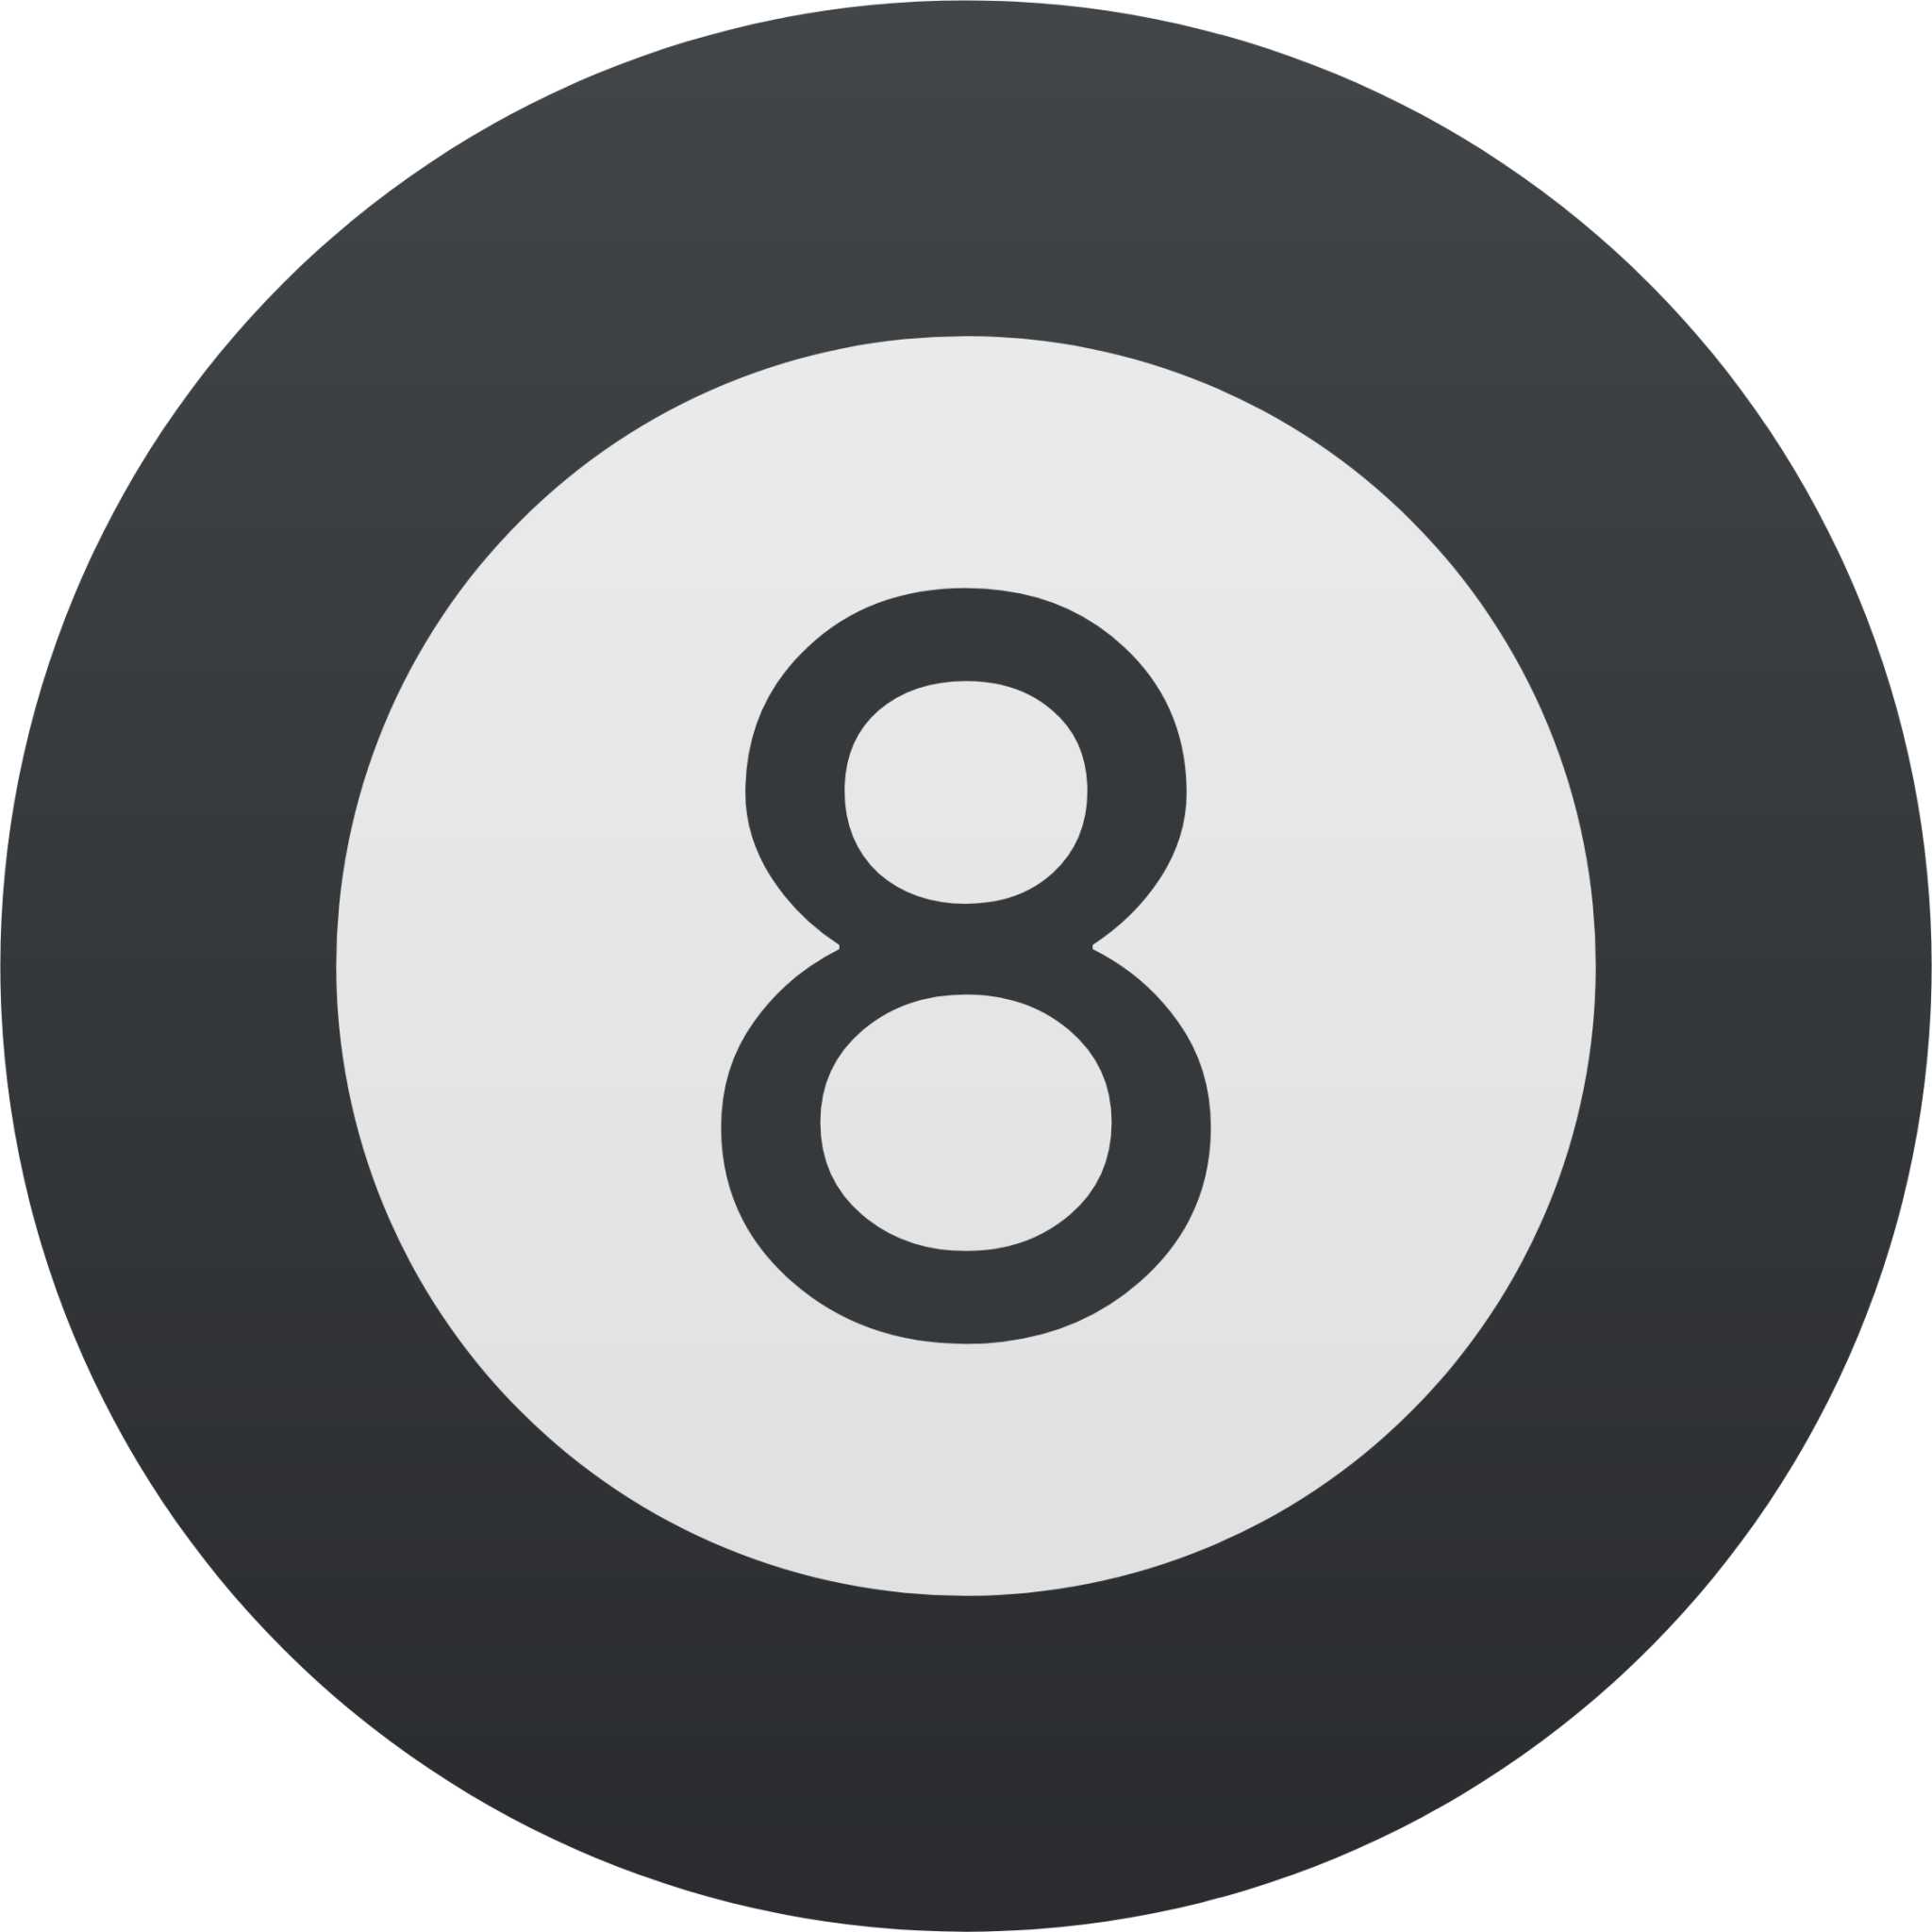 8 ball pool icon